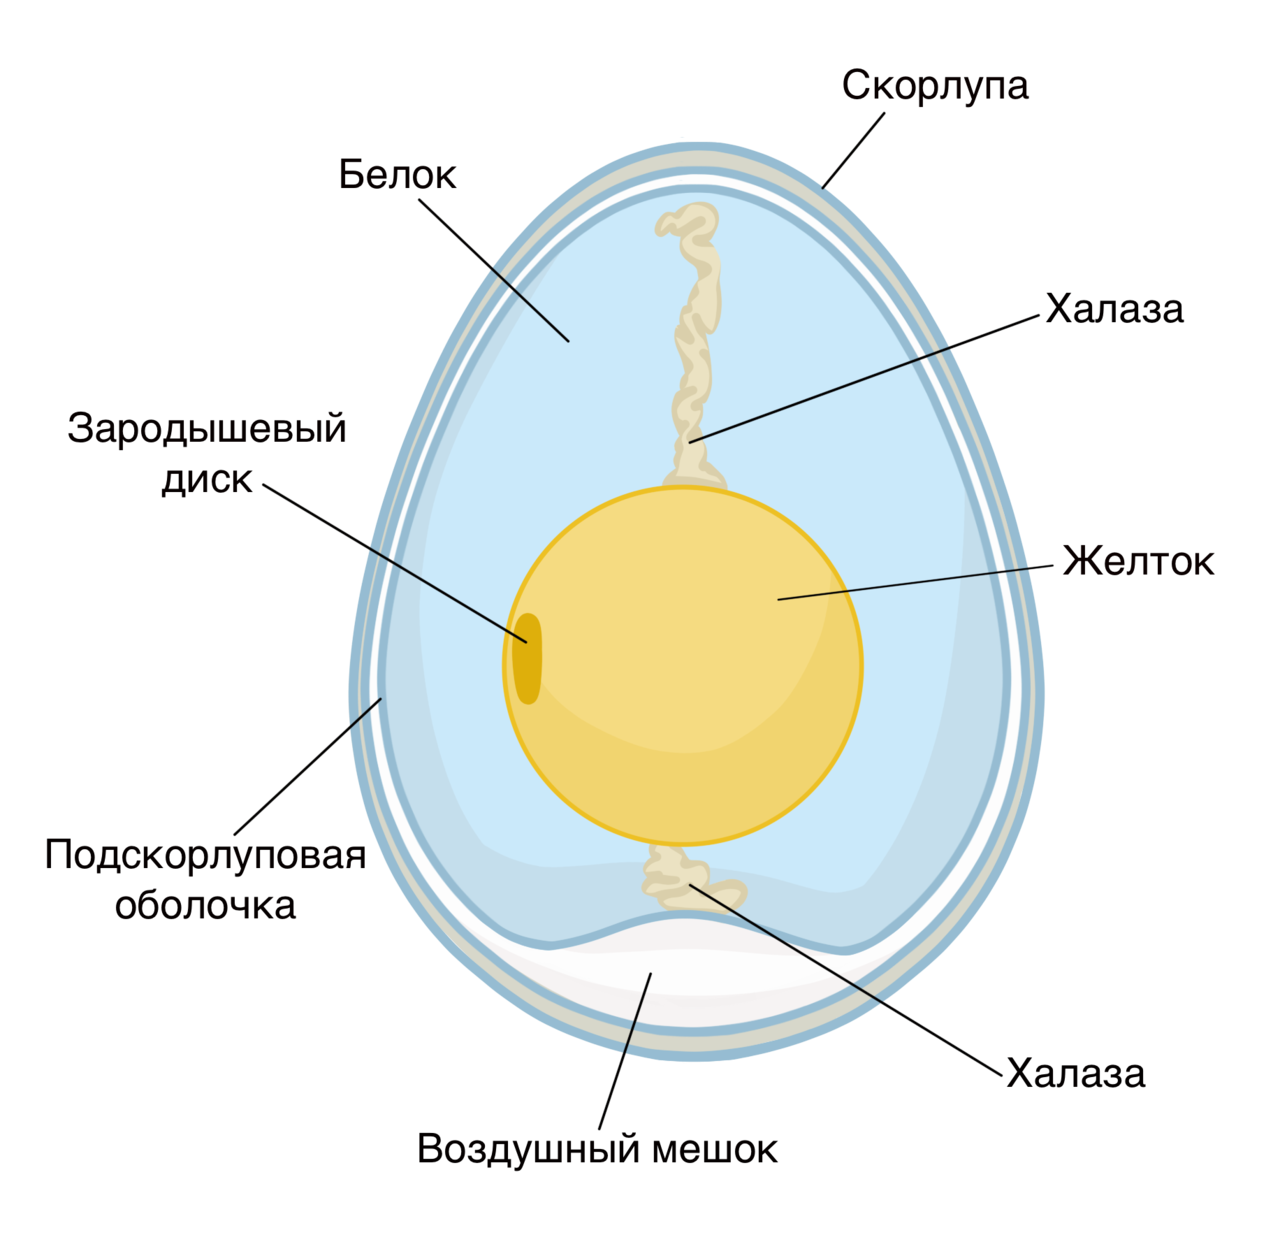 Опишите строение яйца птиц